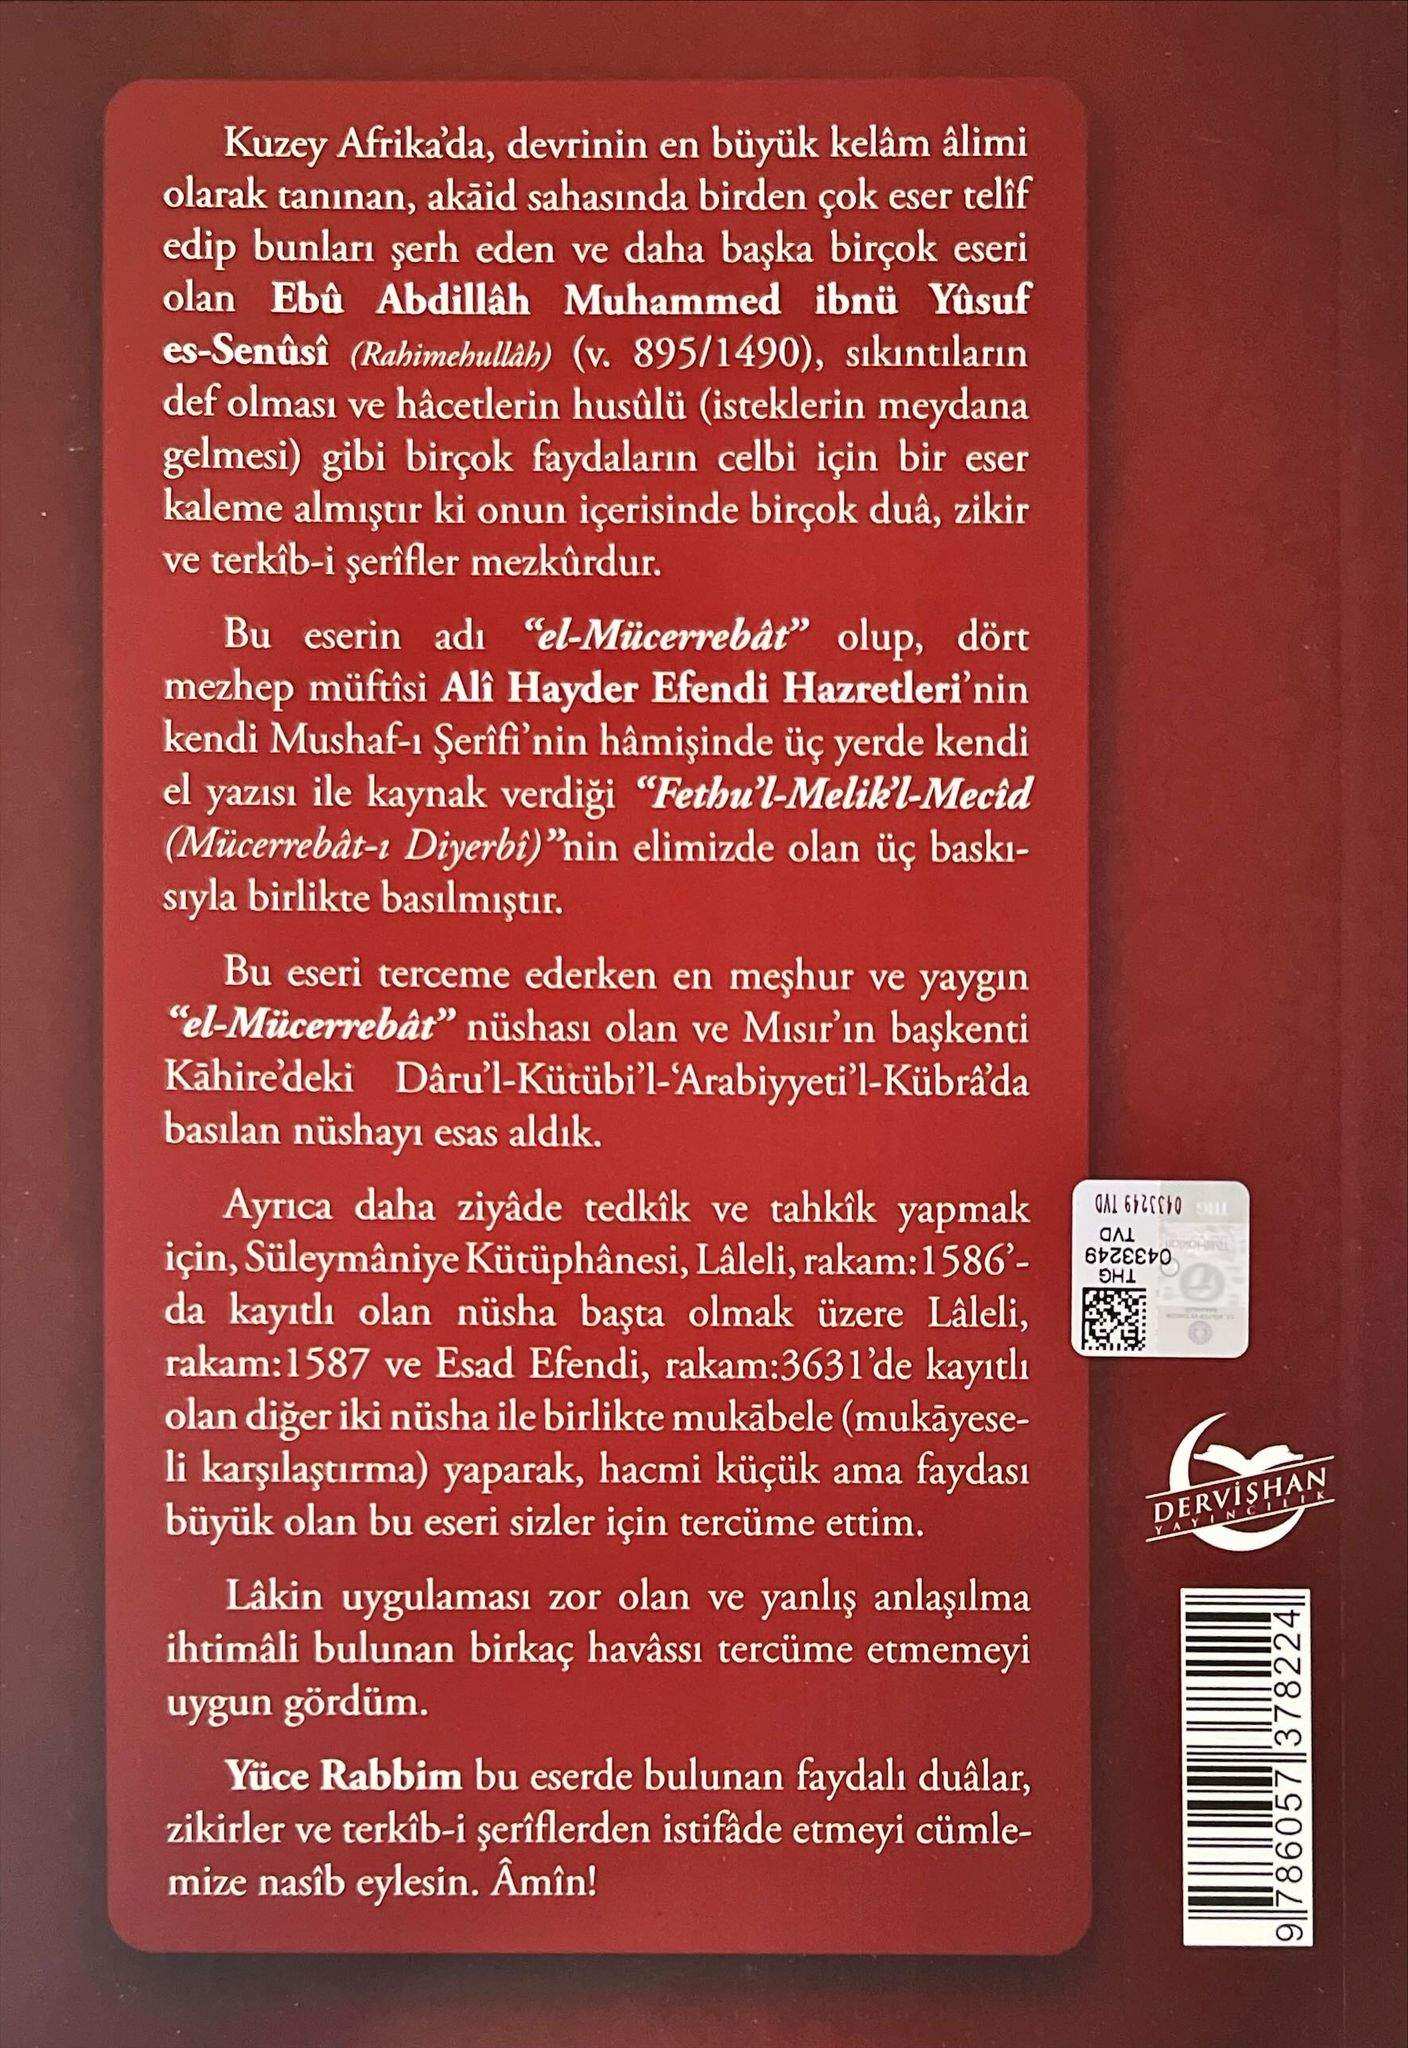 Mücerrebatı Senüsi Tercümesi - Cübbeli Ahmet Hoca